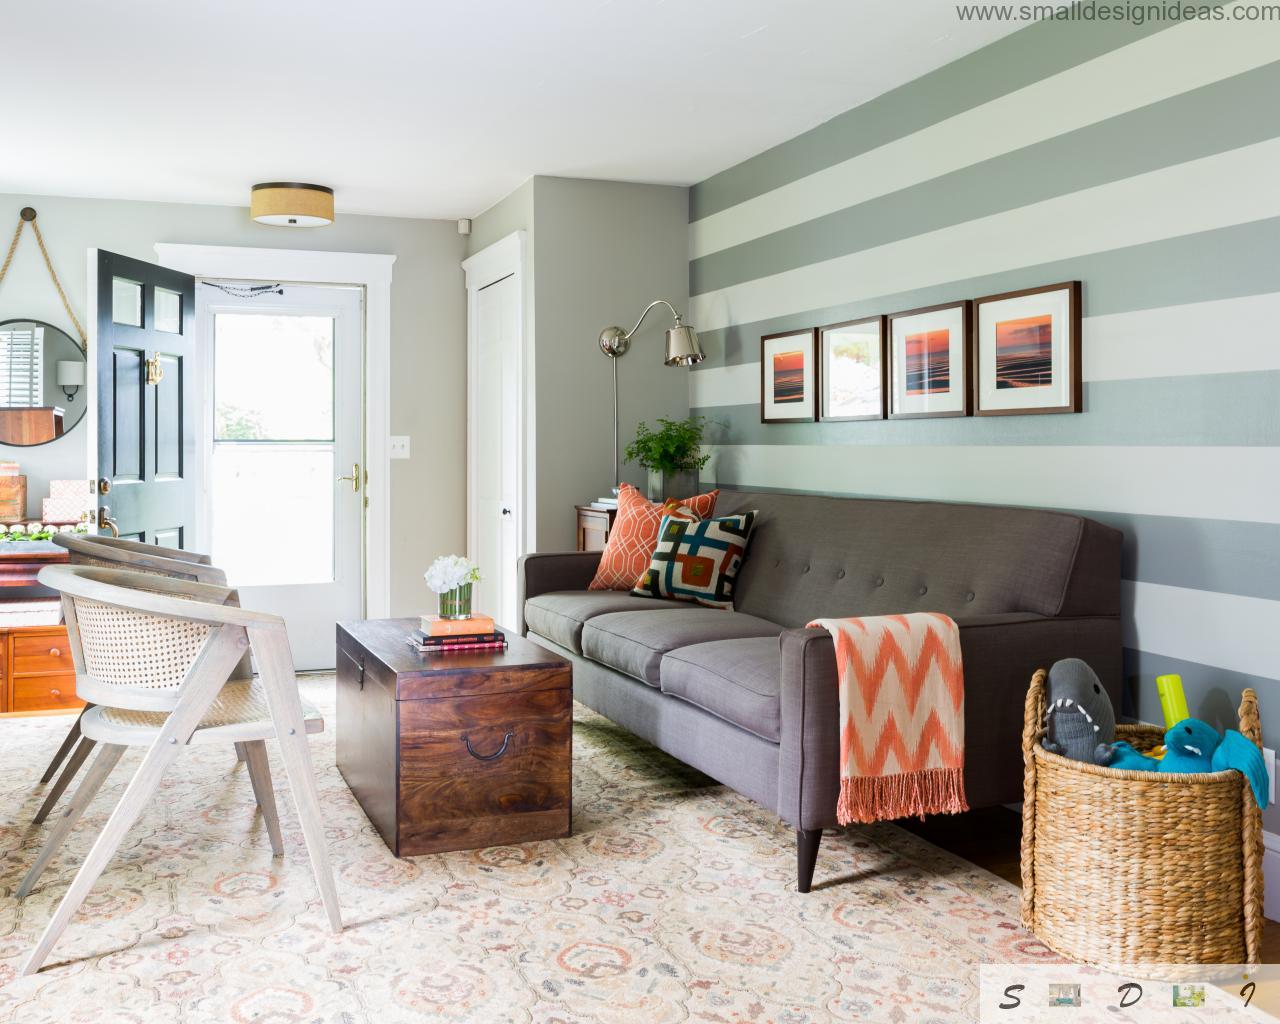 Living Room Paint Ideas To Brighten Room